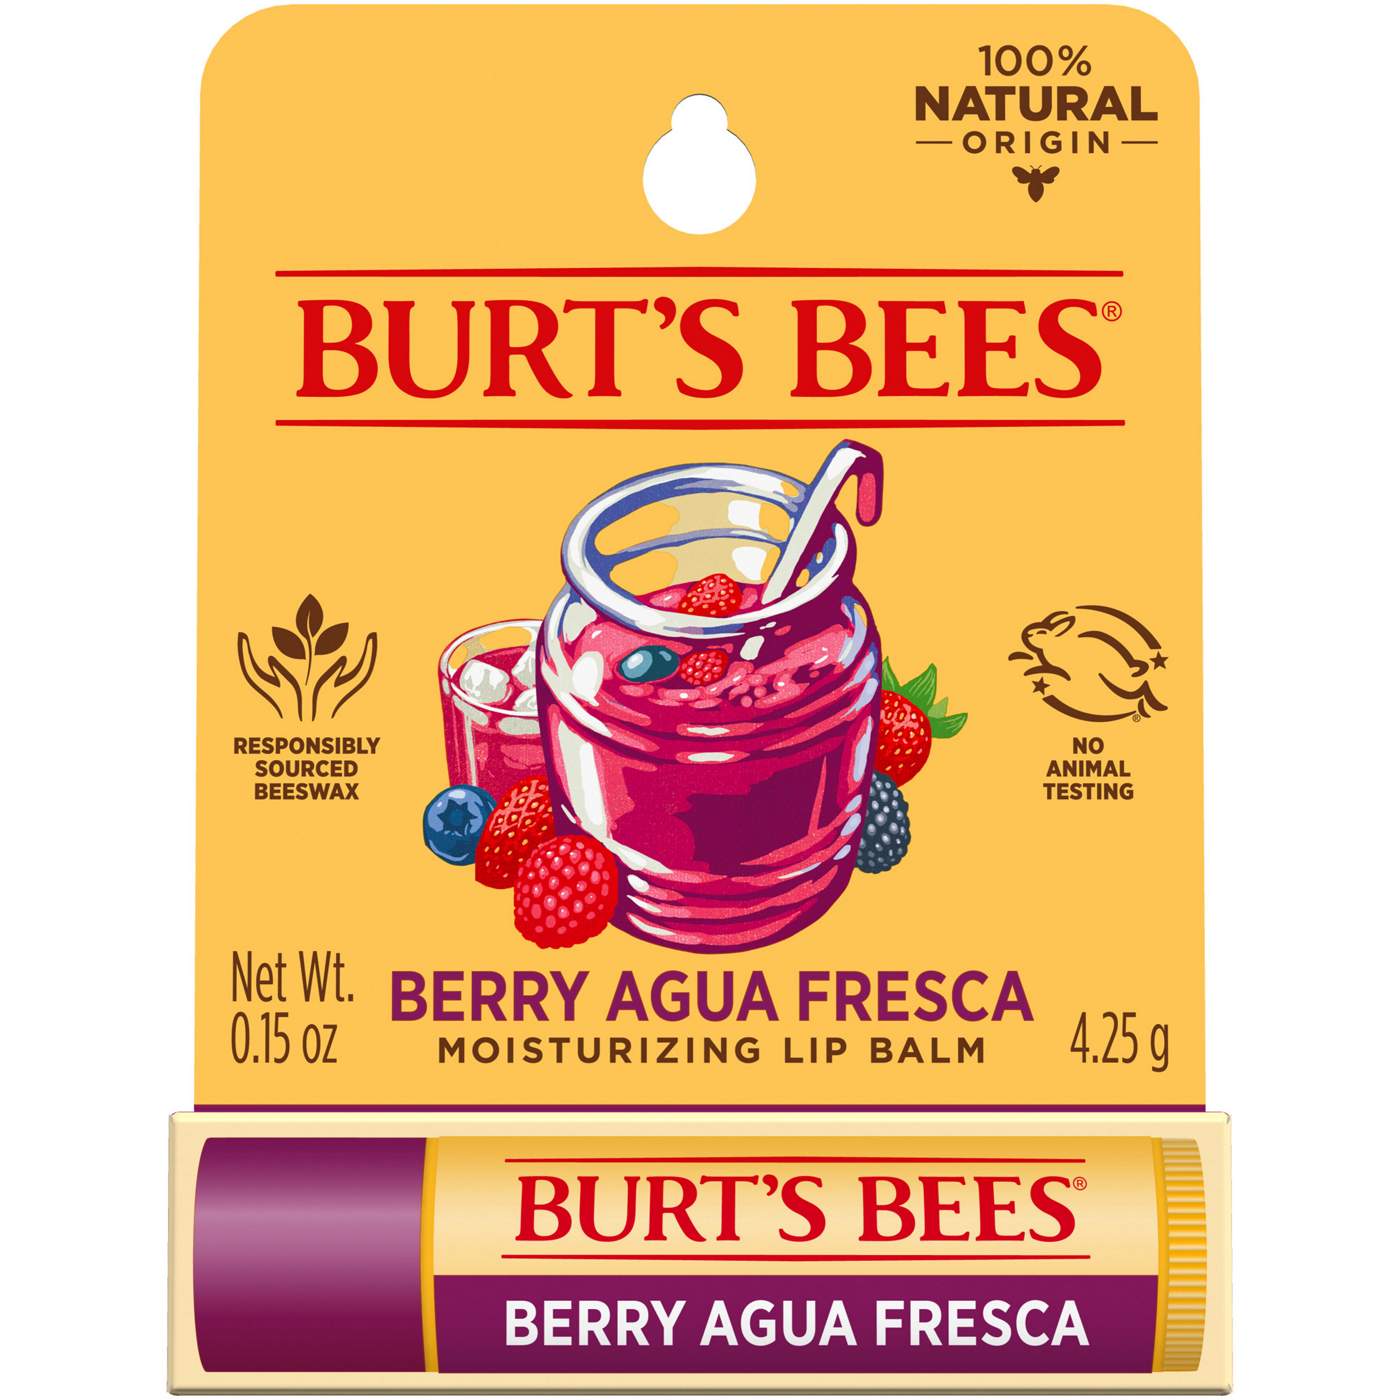 Burt's Bees 100% Natural Origin Moisturizing Lip Balm - Berry Agua Fresca; image 1 of 11